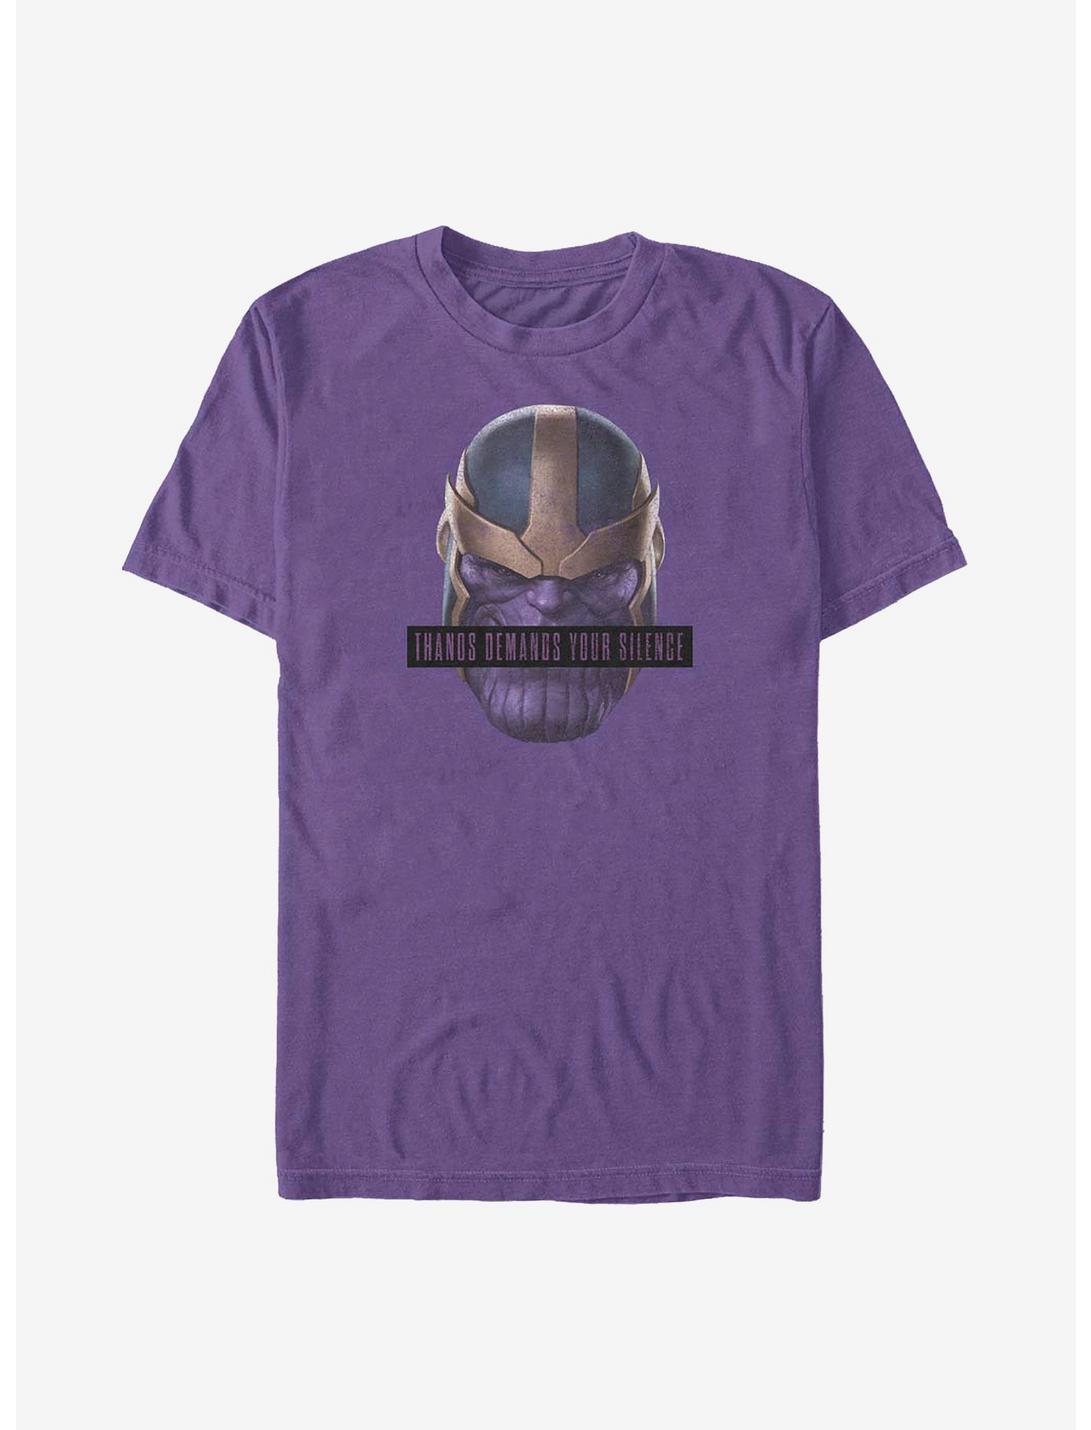 Marvel Avengers Thanos Demands Silence T-Shirt, PURPLE, hi-res